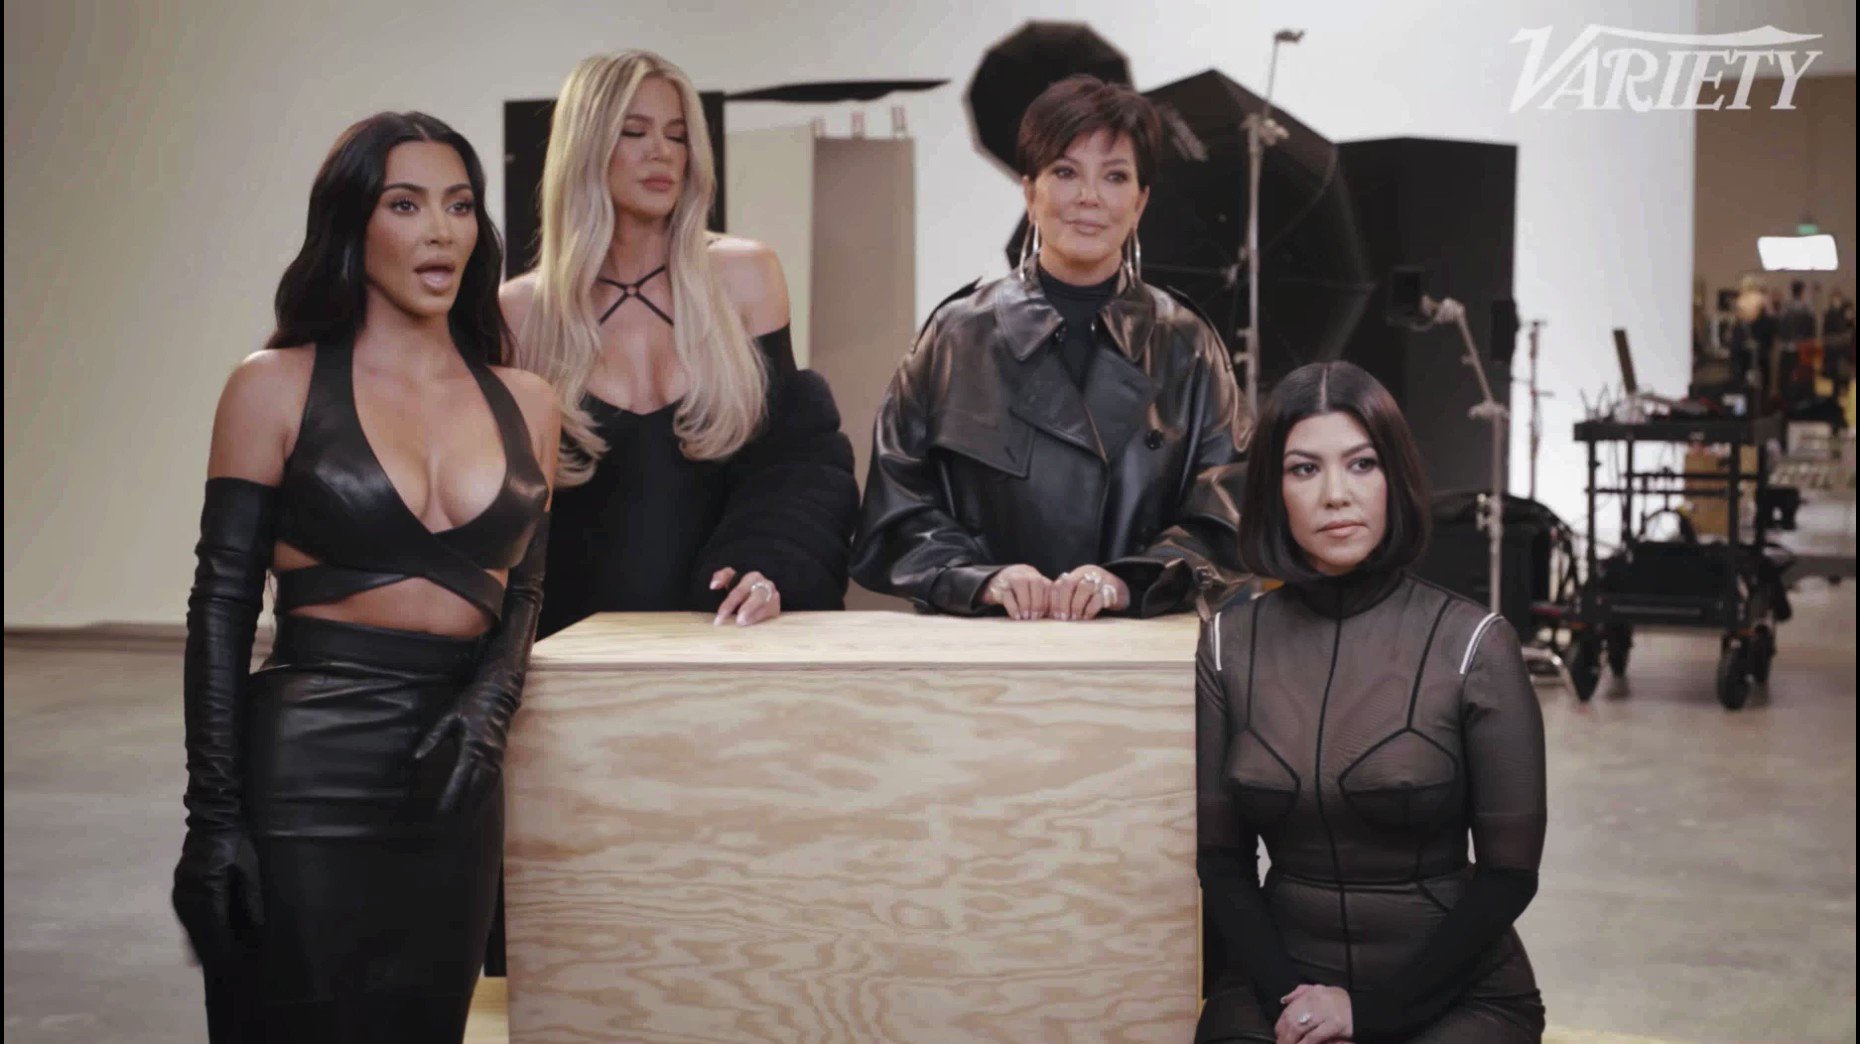 Kim Kardashian told women to 'get  up and work.' Some people